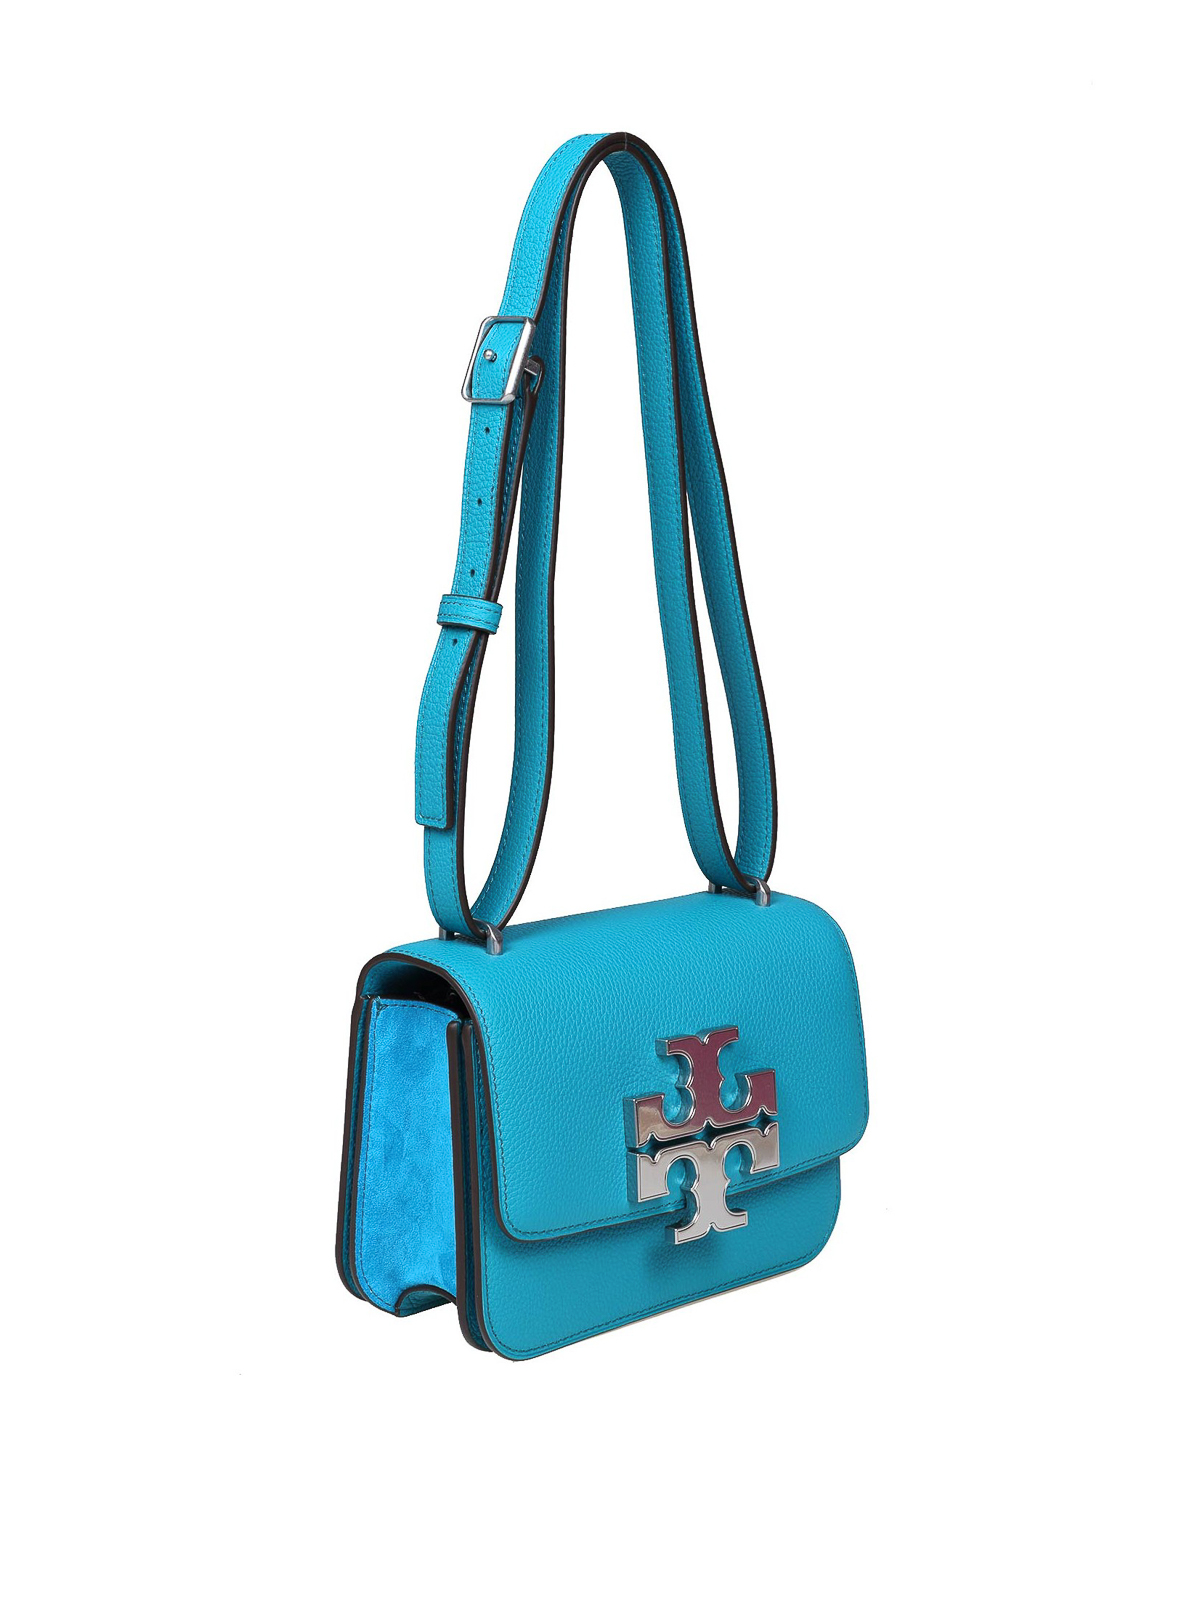 Eleanor Small Bag : Women's Handbags, Shoulder Bags